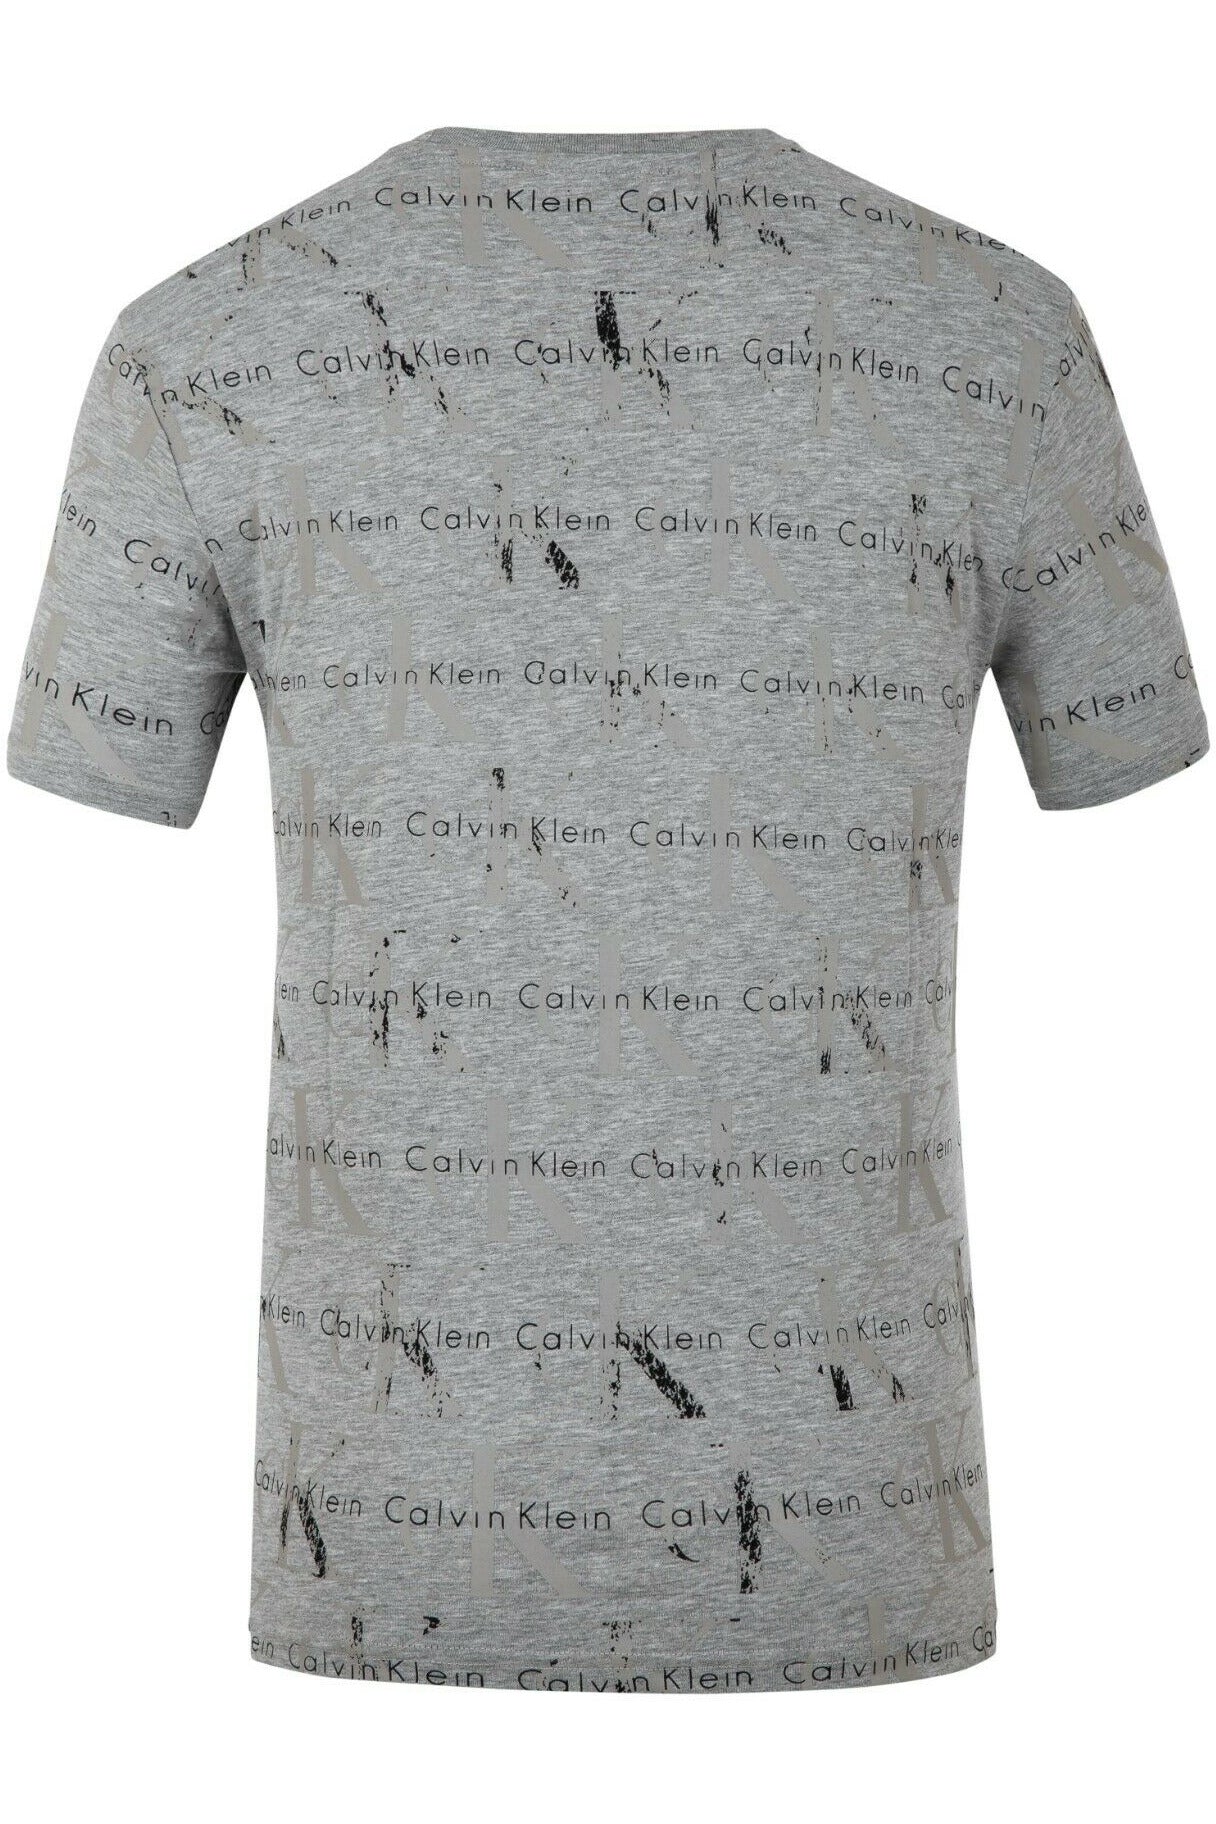 Calvin Klein Grey Men's T-Shirt 100% Cotton